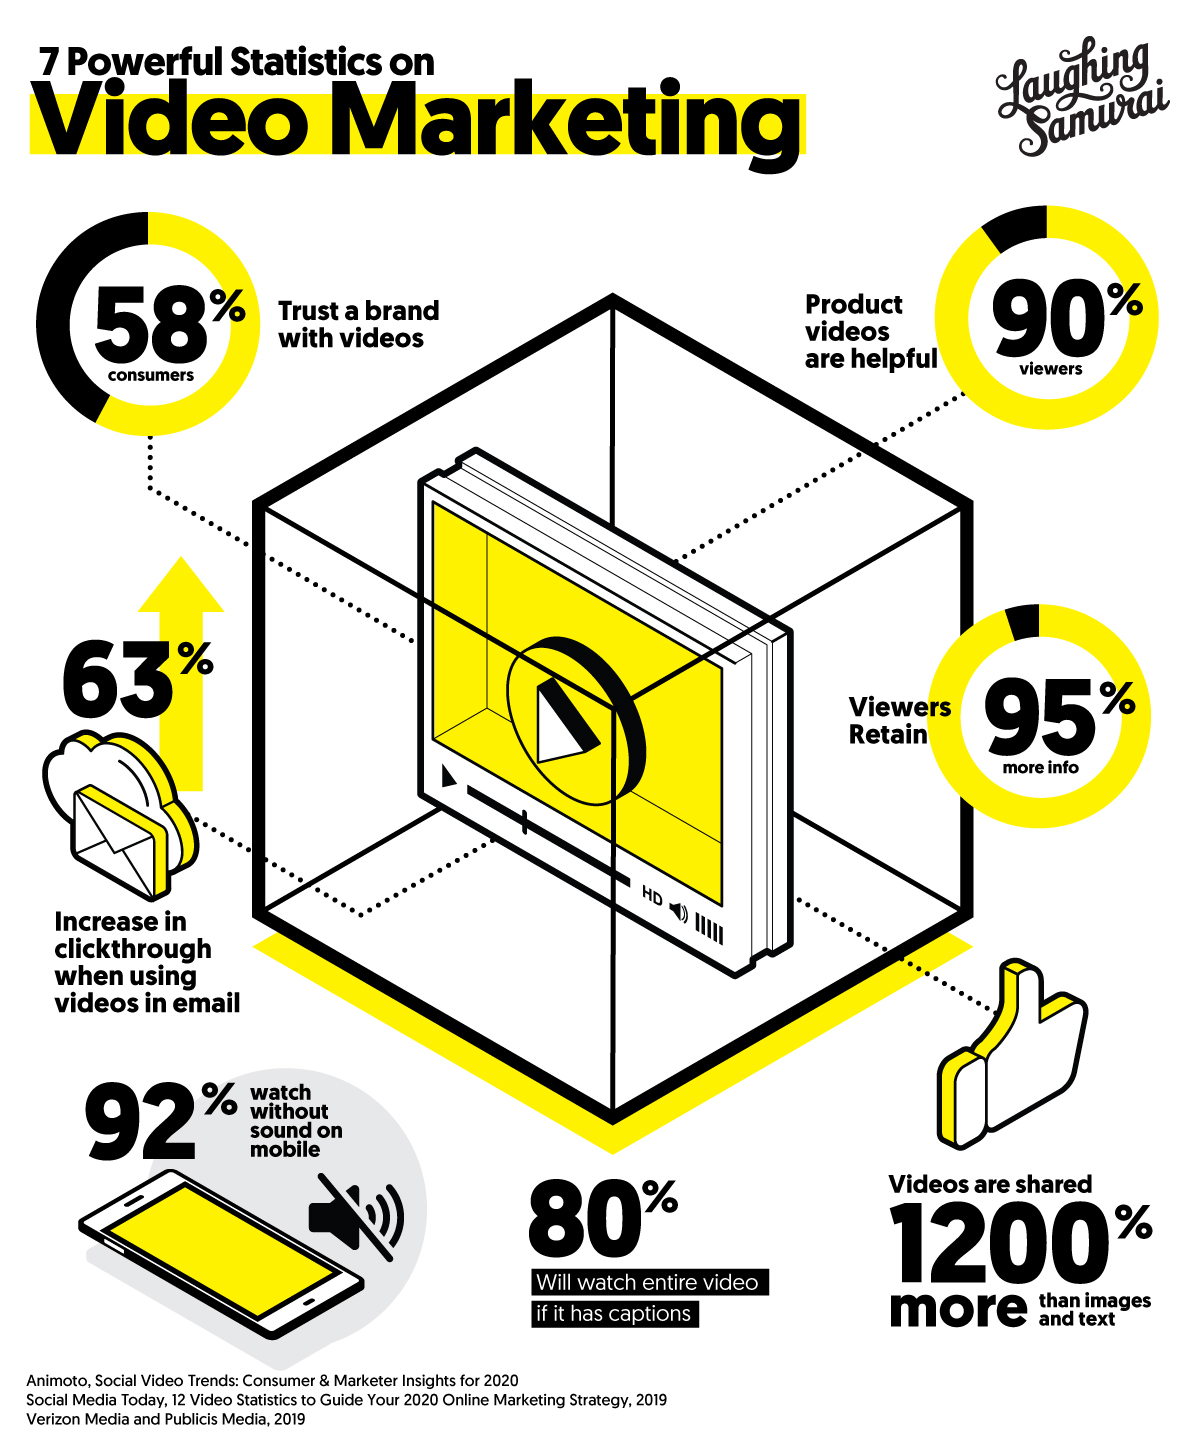 7 Powerful Statistics on Video Marketing - infographic